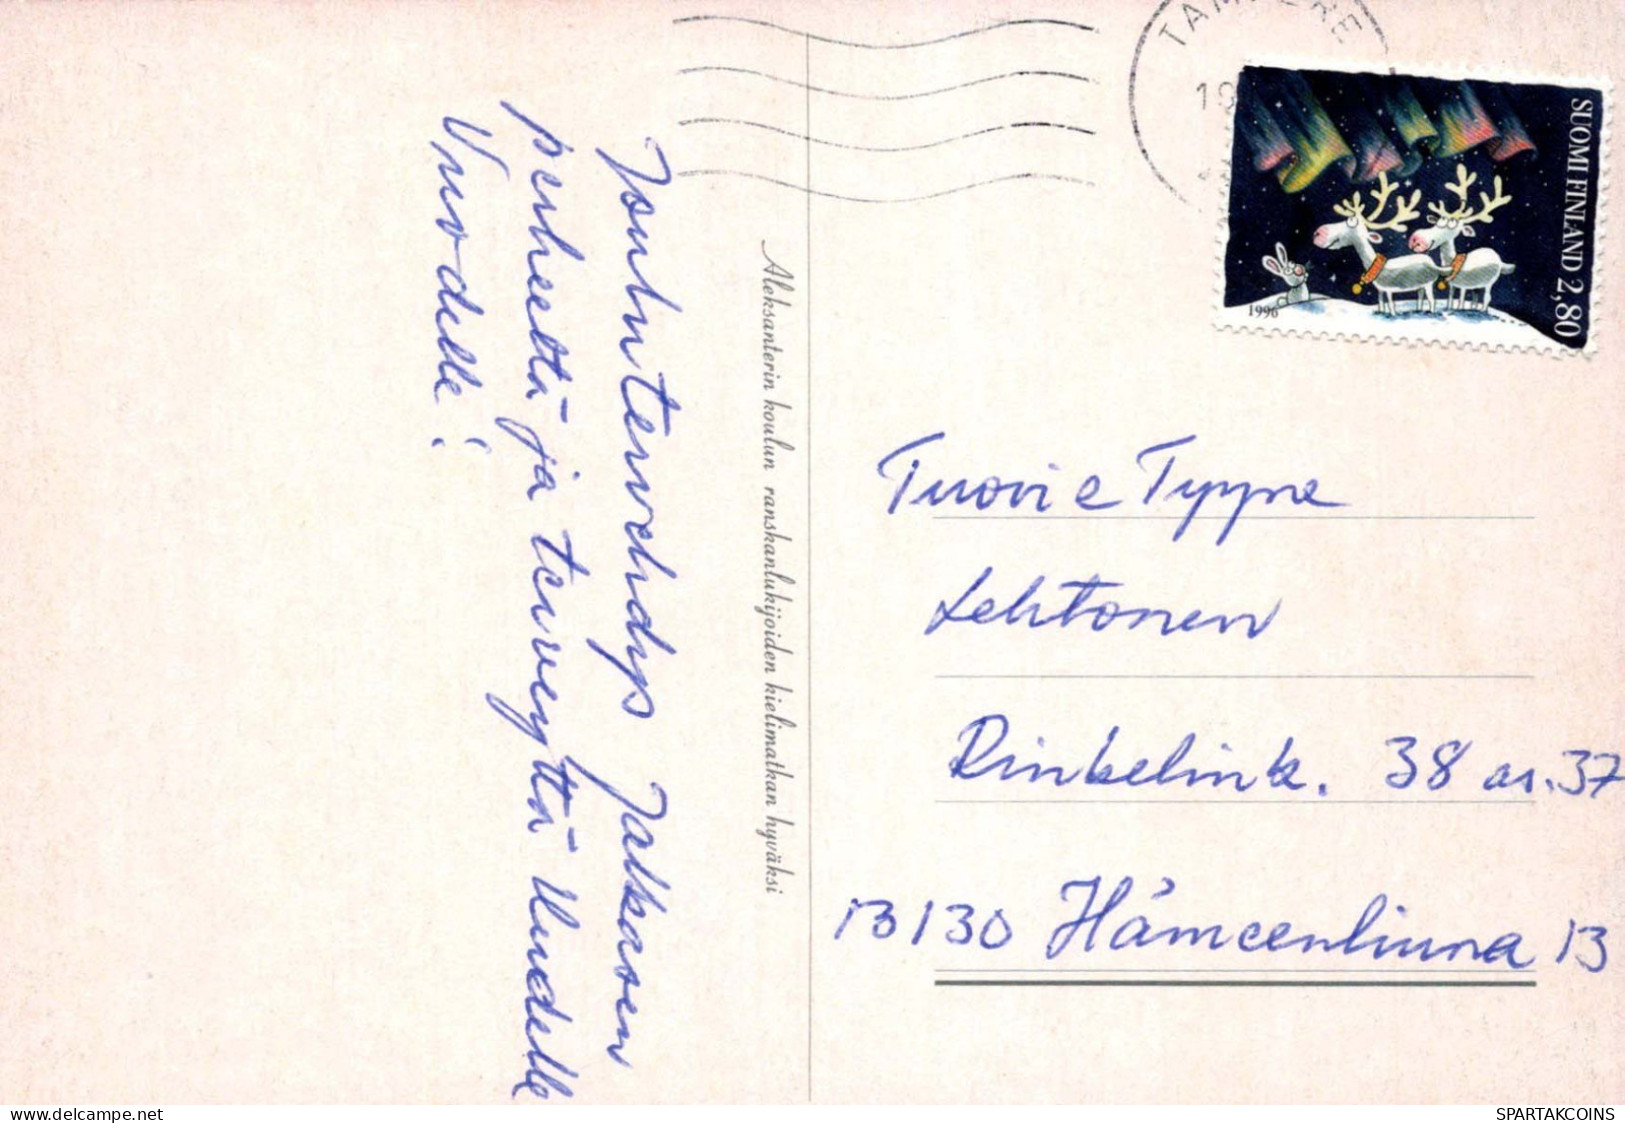 OURS Animaux Vintage Carte Postale CPSM #PBS153.FR - Bären